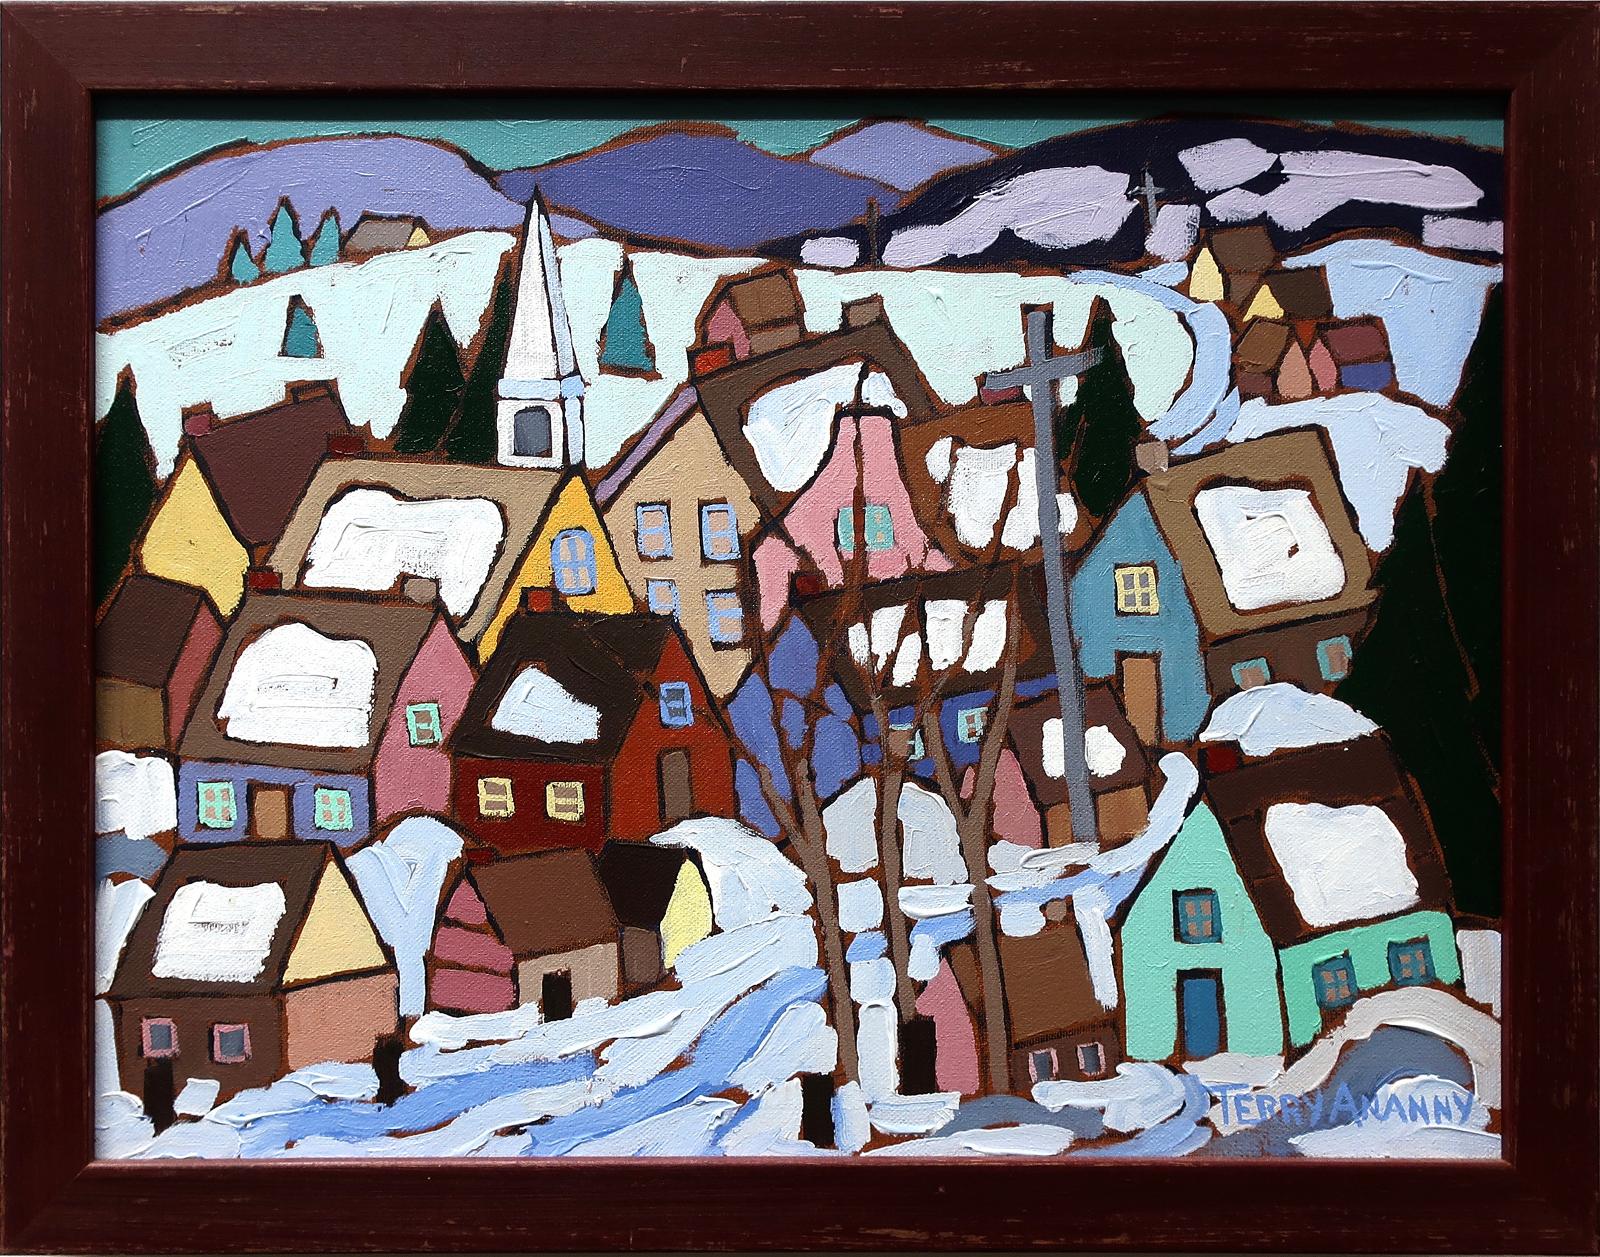 Terry Ananny (1956) - Village Au Quebec